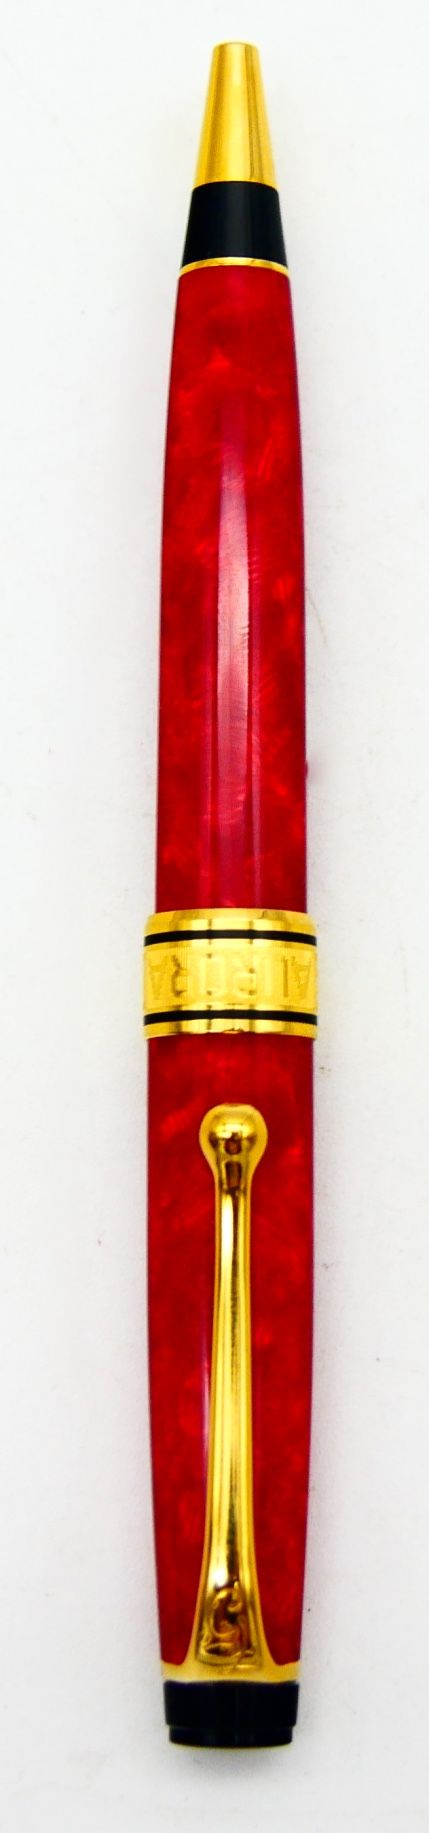 Null 傲罗拉

Optima 75周年纪念

仿红色珍珠母树脂和镀金金属的Biros，上面刻有奥罗拉的希腊门楣。

编号为1236

长：13.5厘米，5.&hellip;